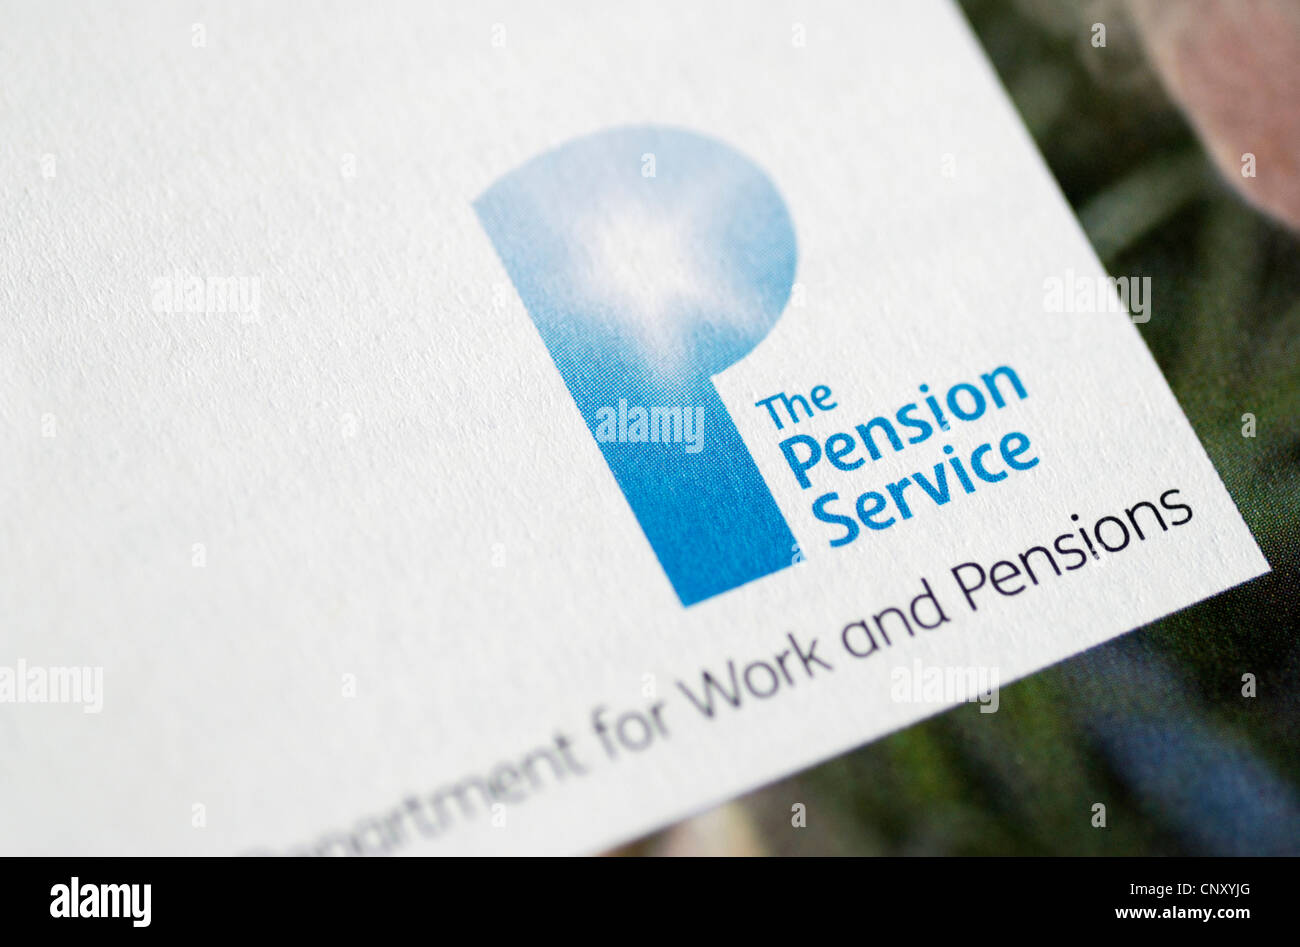 UK Pension Service logo on a leaflet Stock Photo